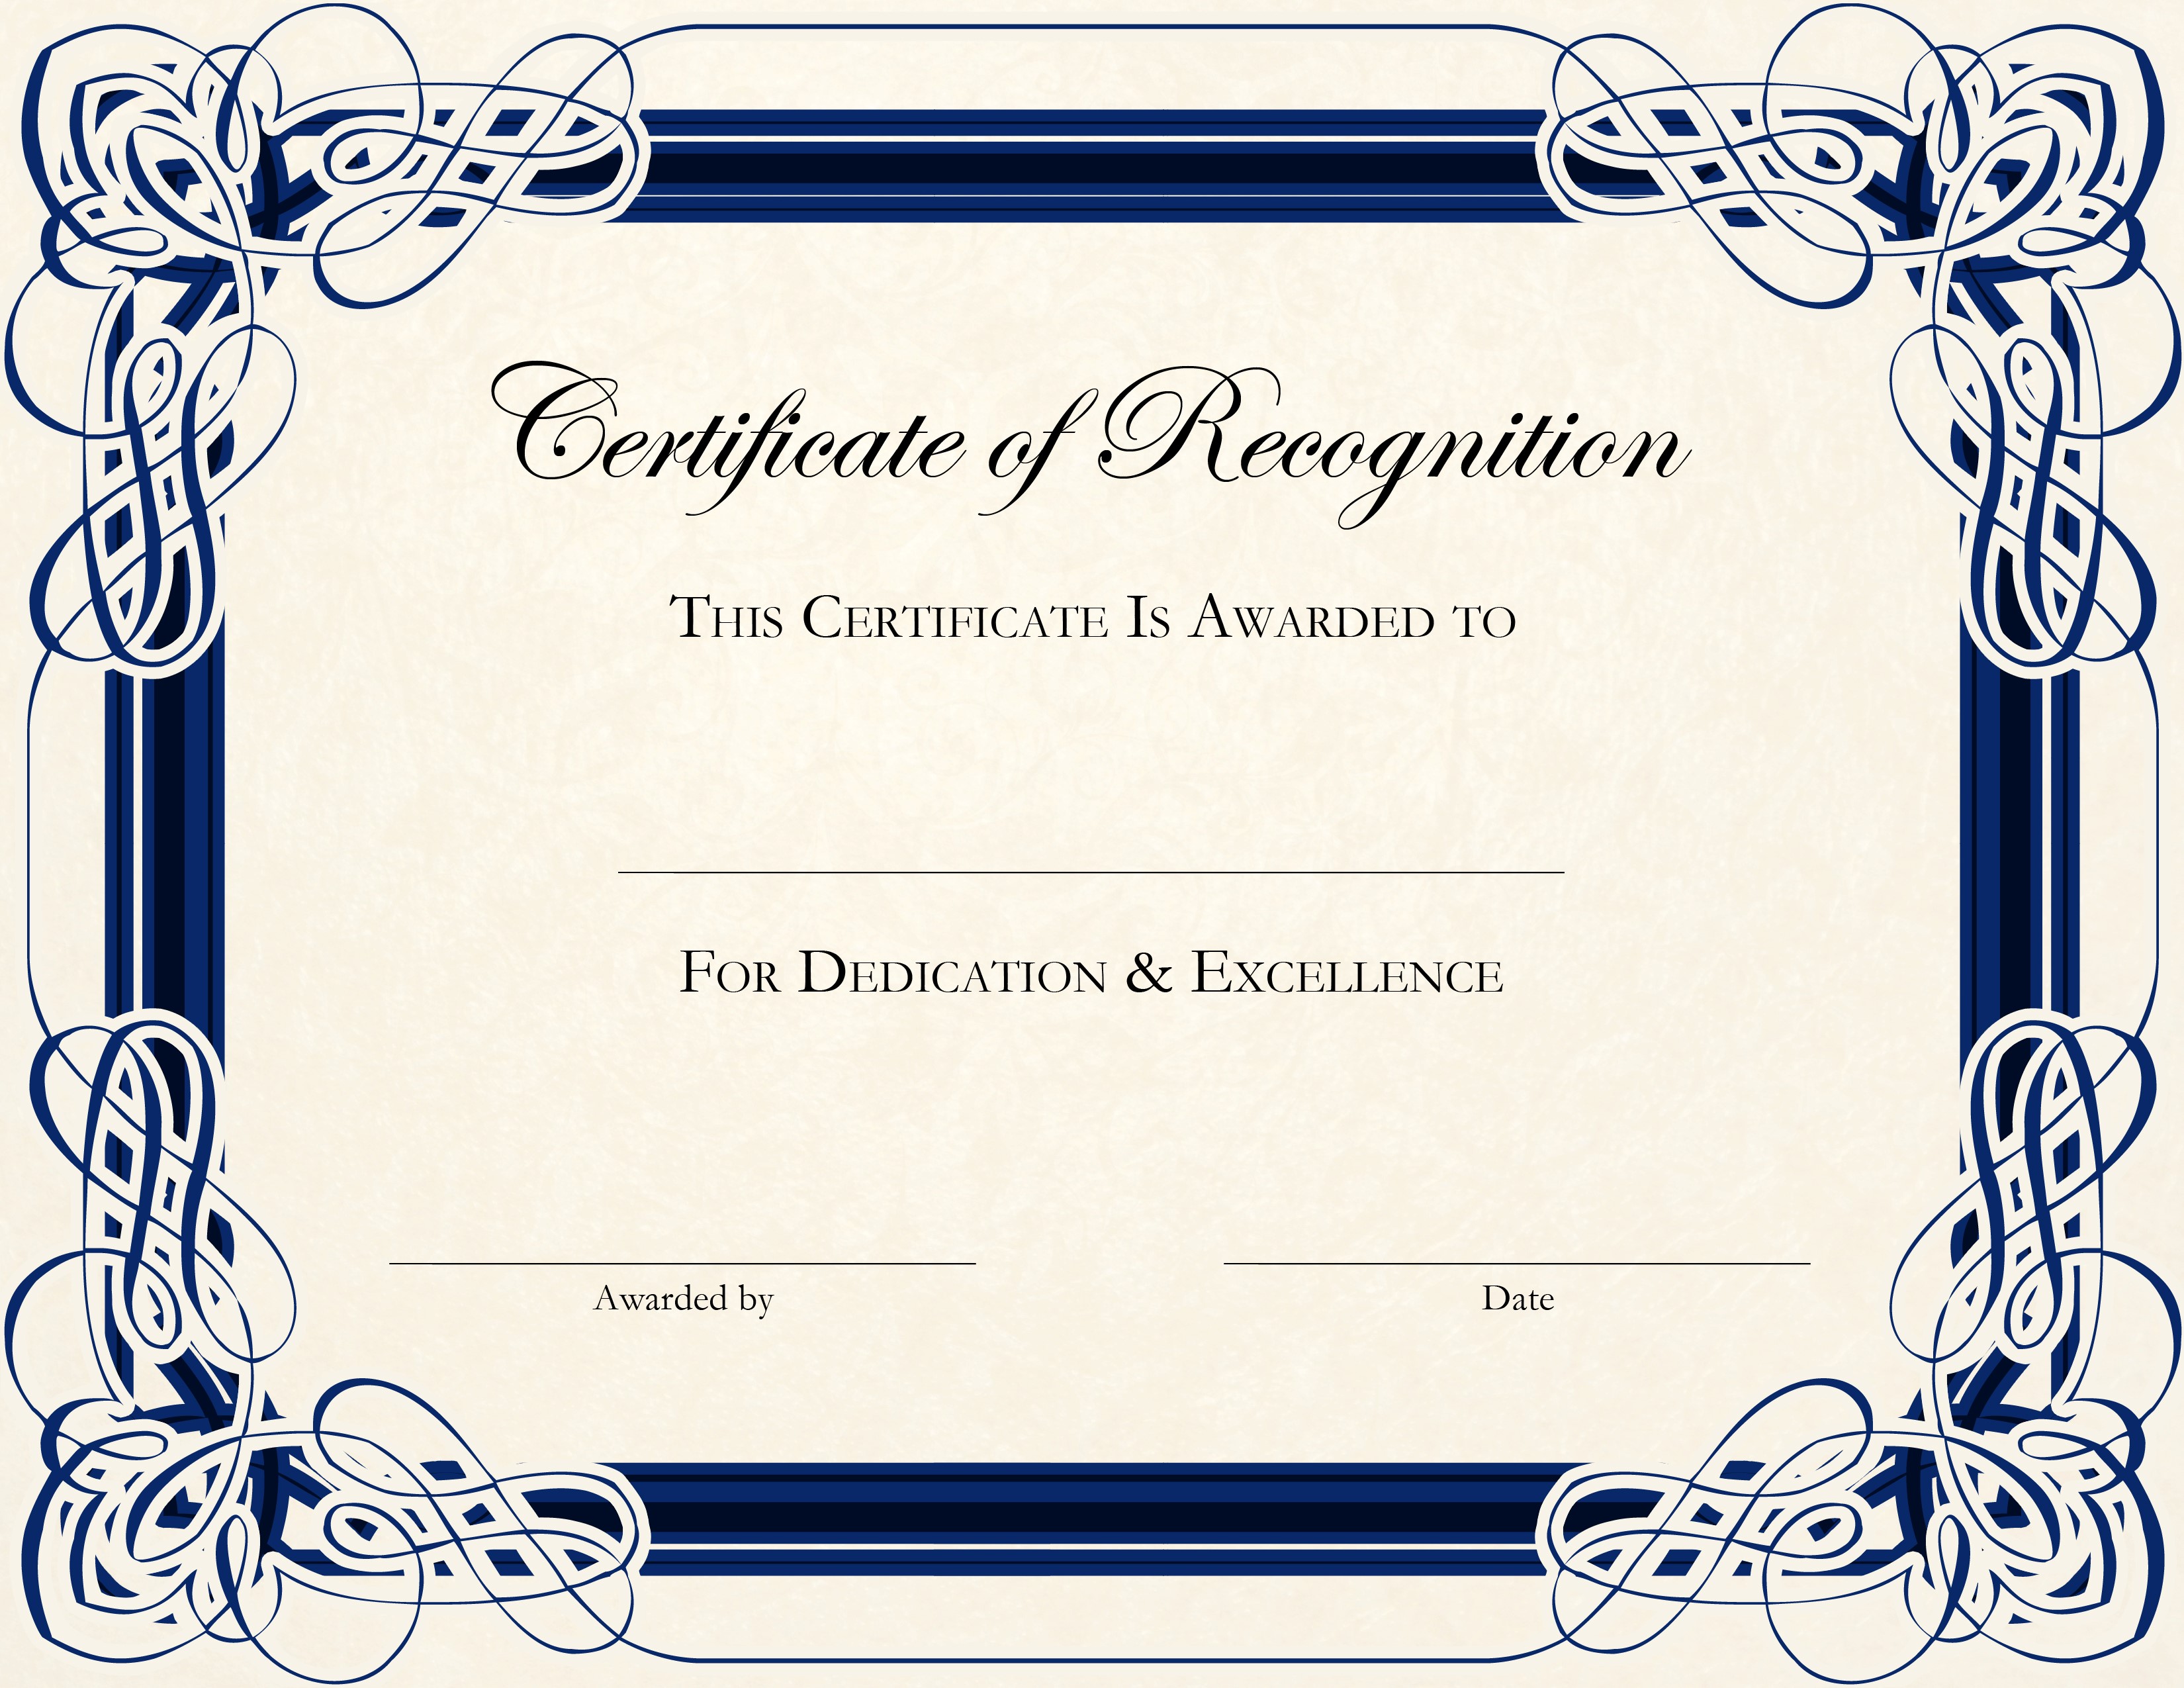 Certificate Template Free Printable – certificates ...
 Blank Certificate Templates For Word Free